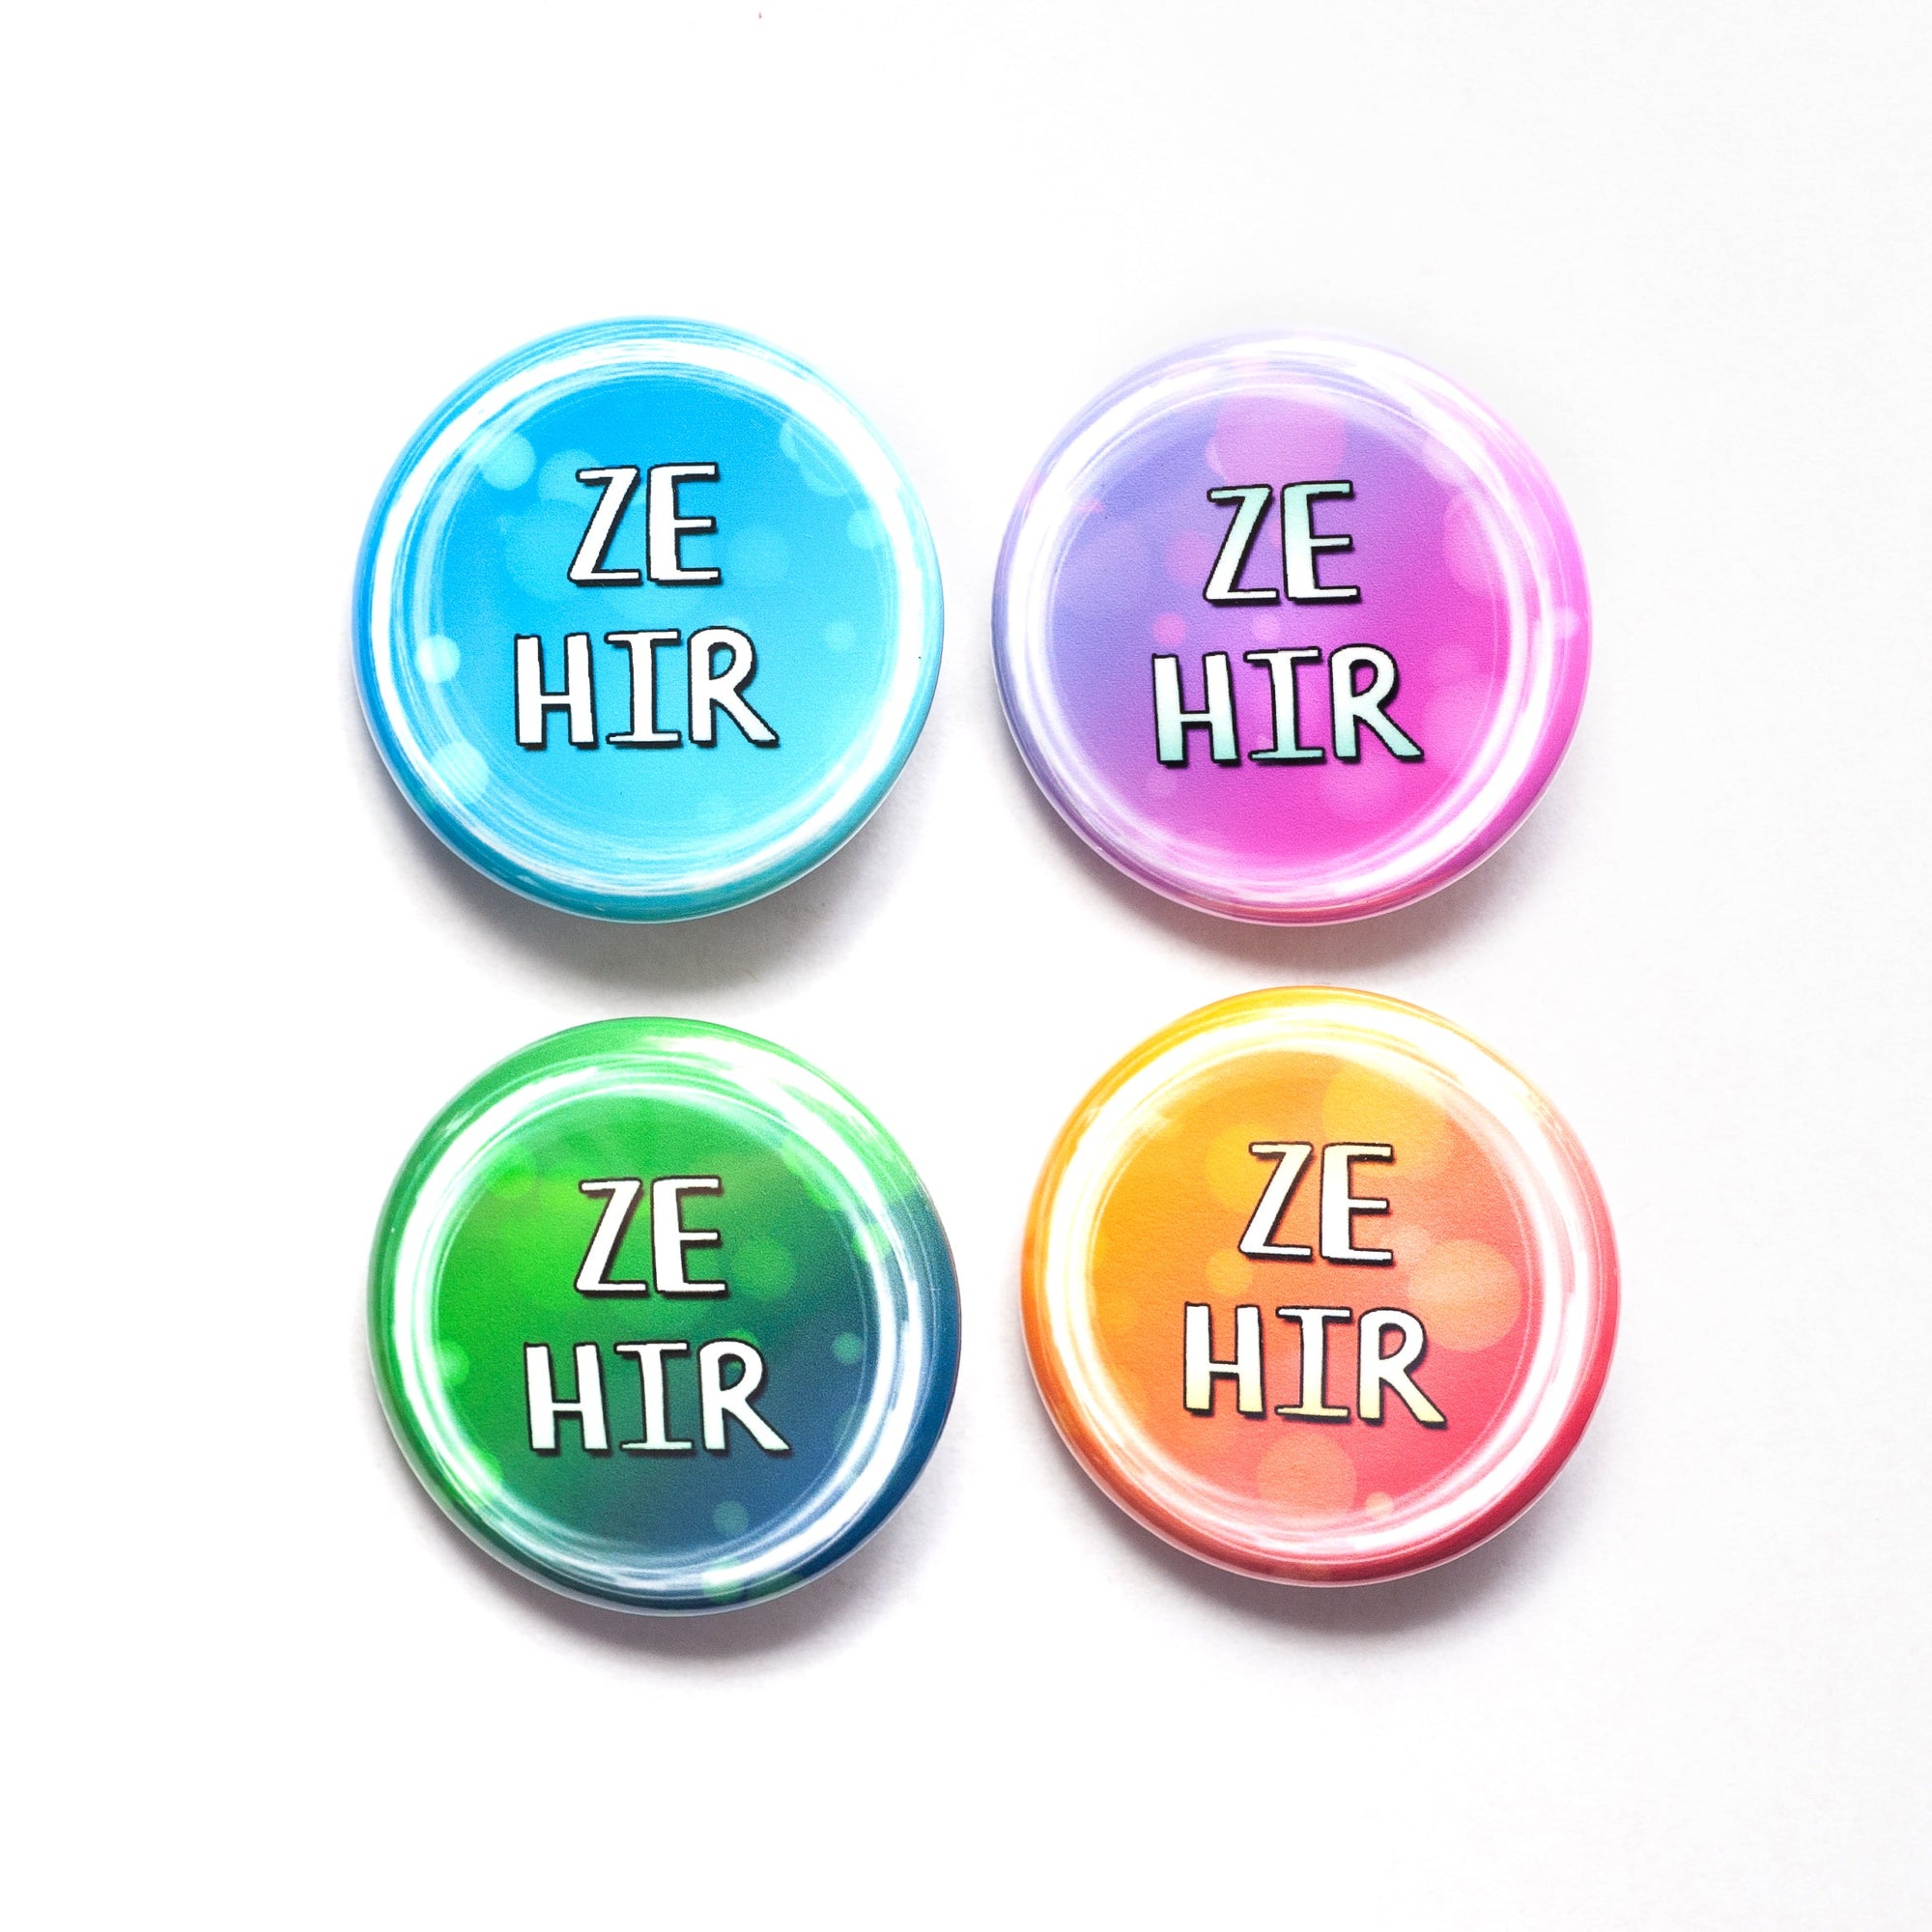 Ze/hir pronoun buttons